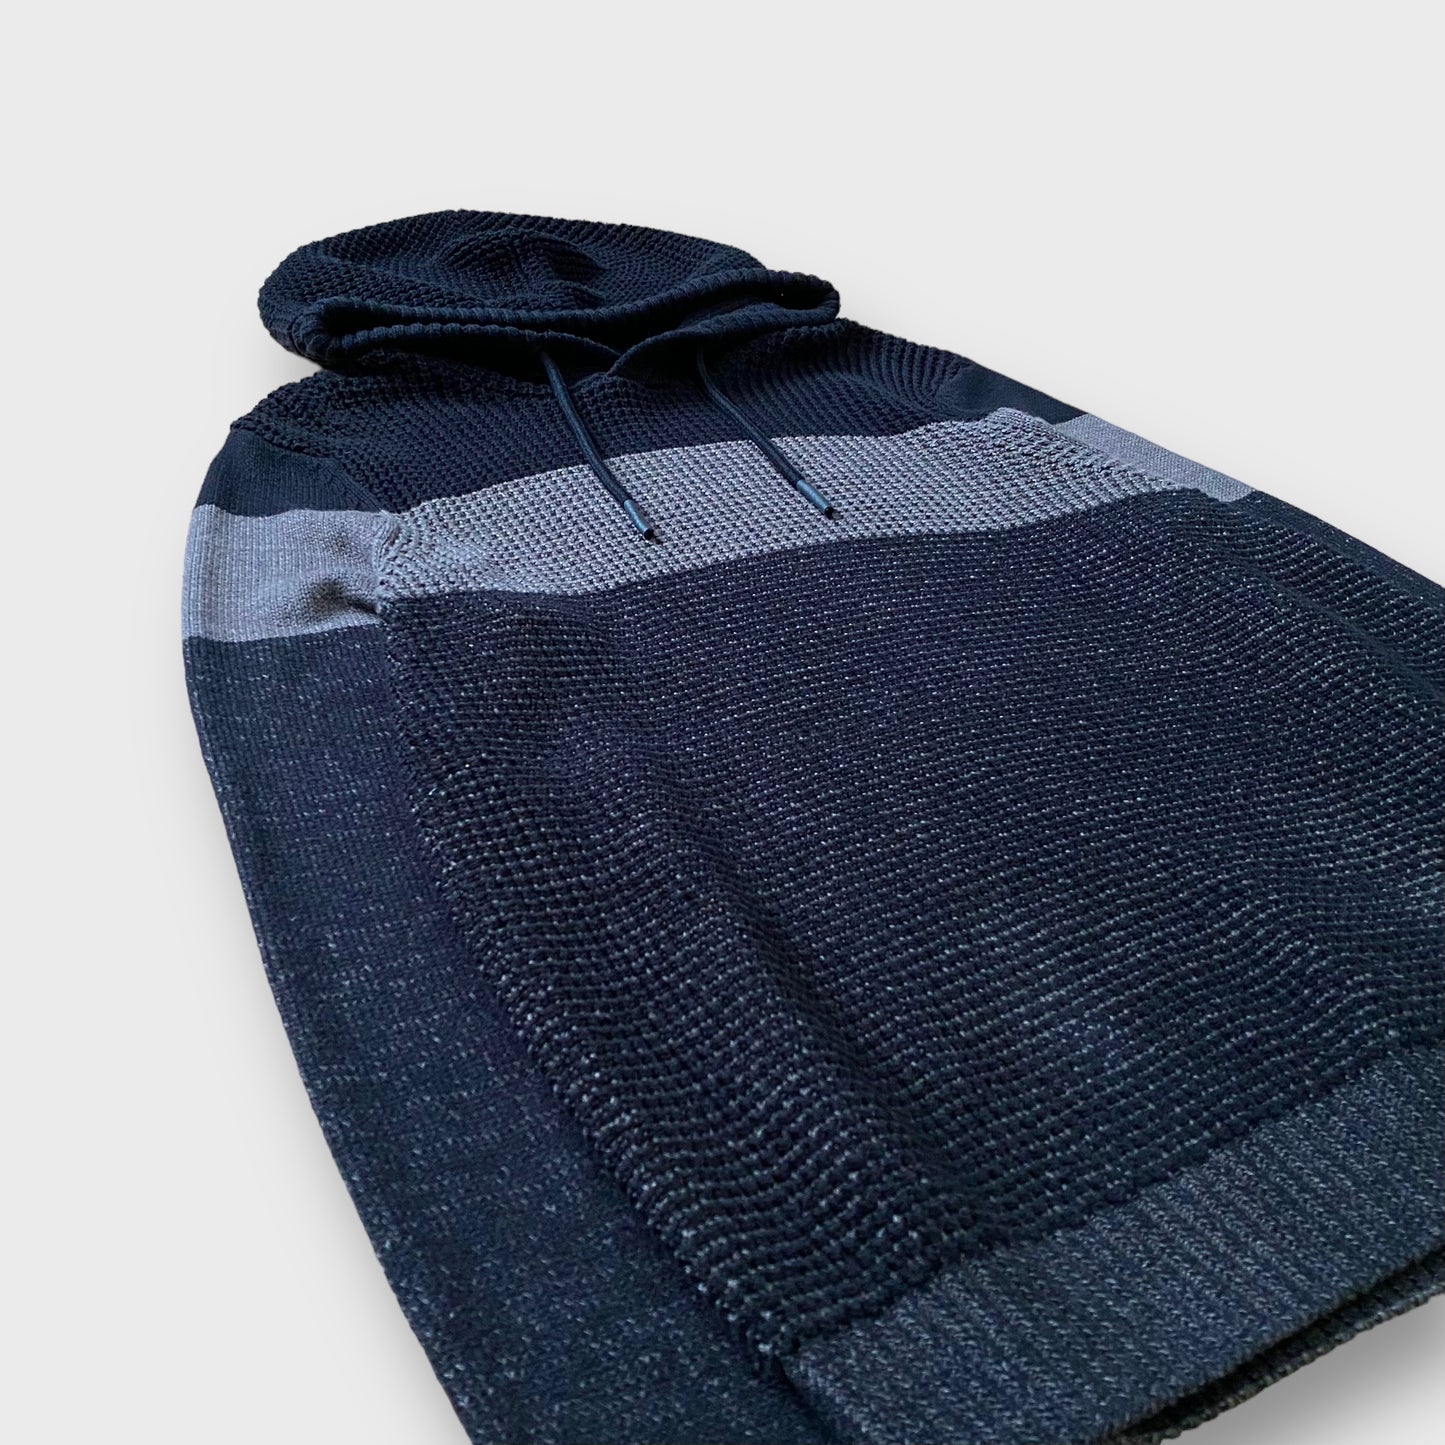 Border pattern thermal knit hoodie